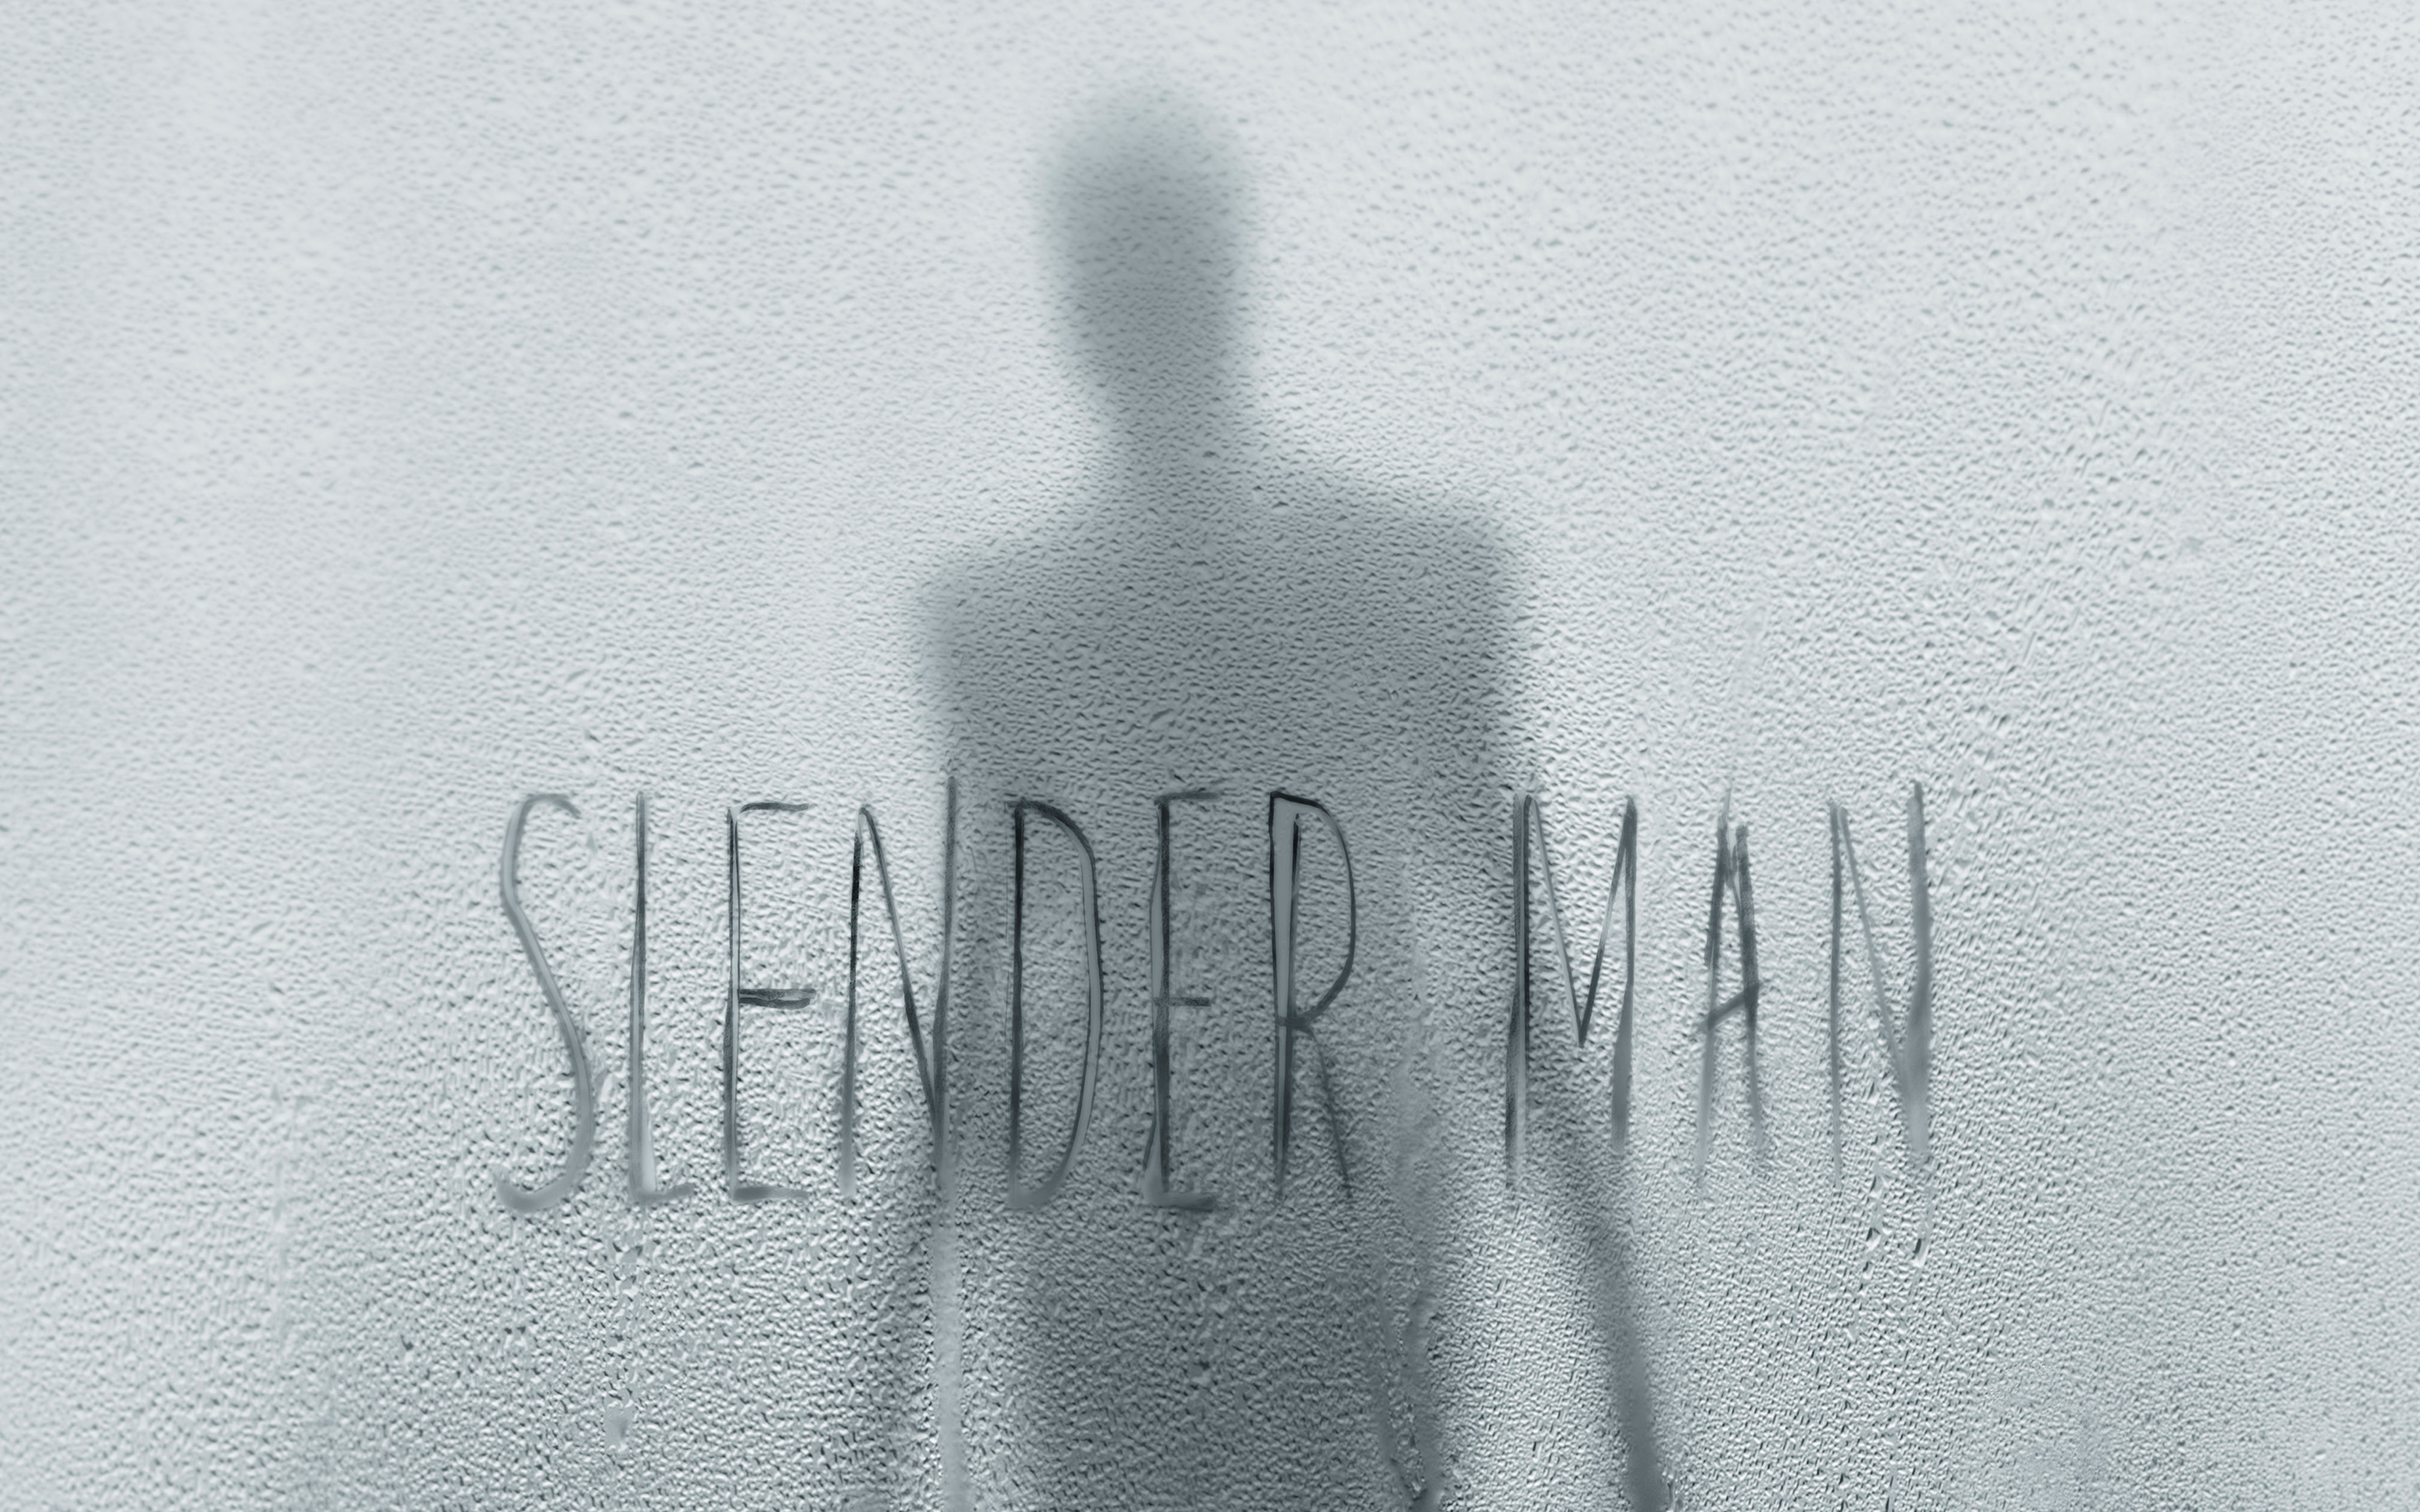 Slender Man 2018